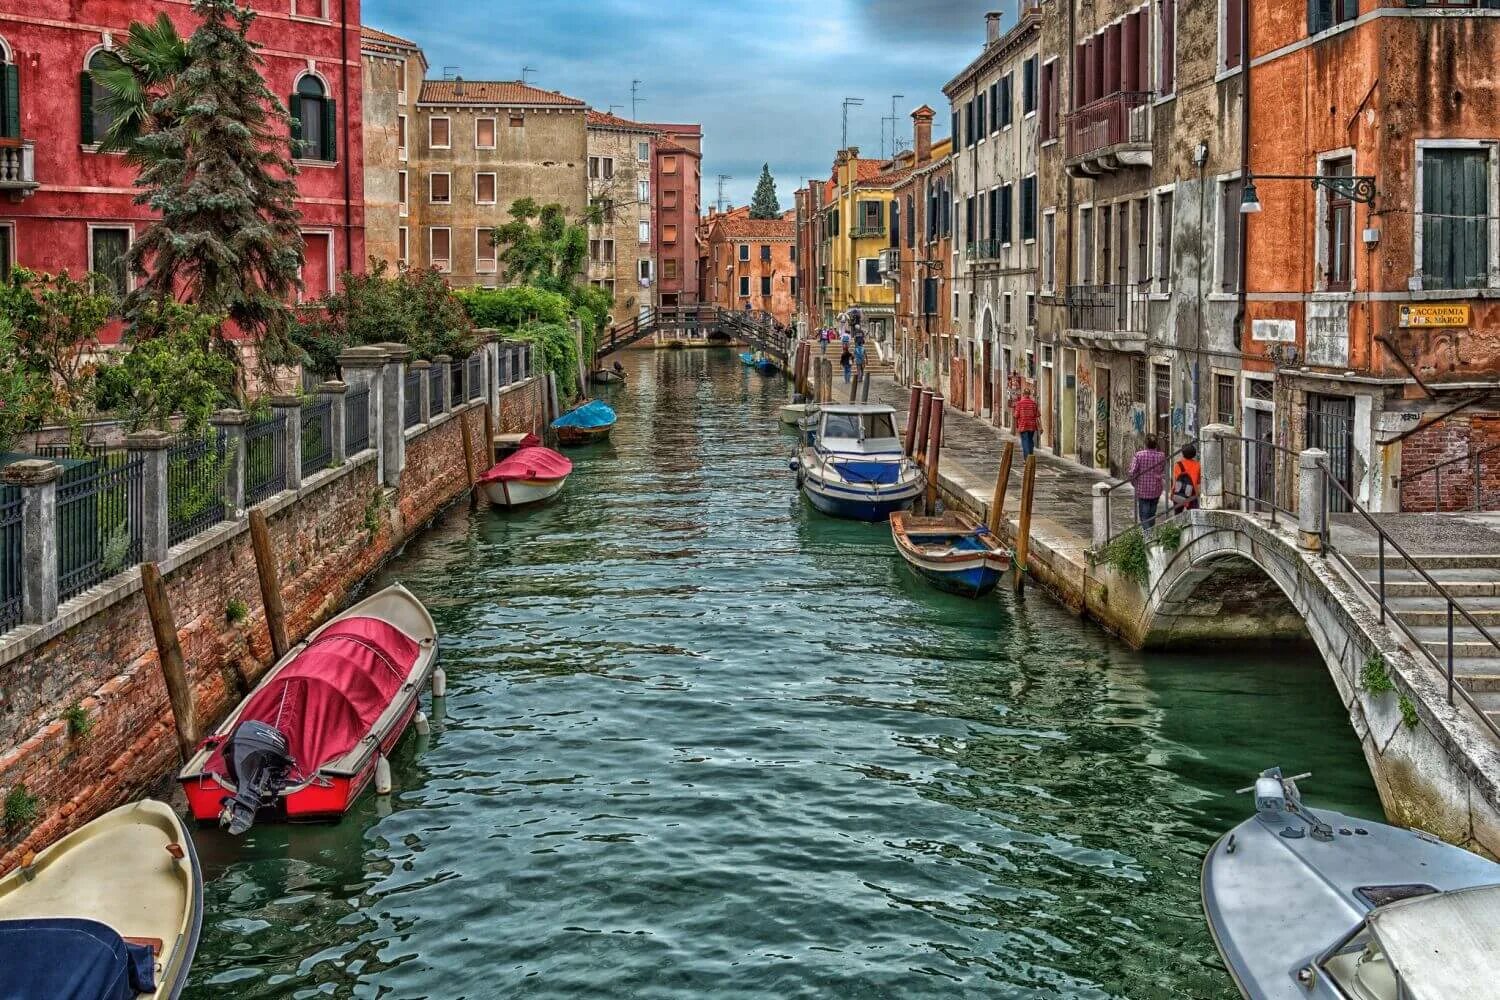 Италия город Венеция (Venice). Grand canal Венеция. Венеция Италия Гранд канал. Венис Италия.